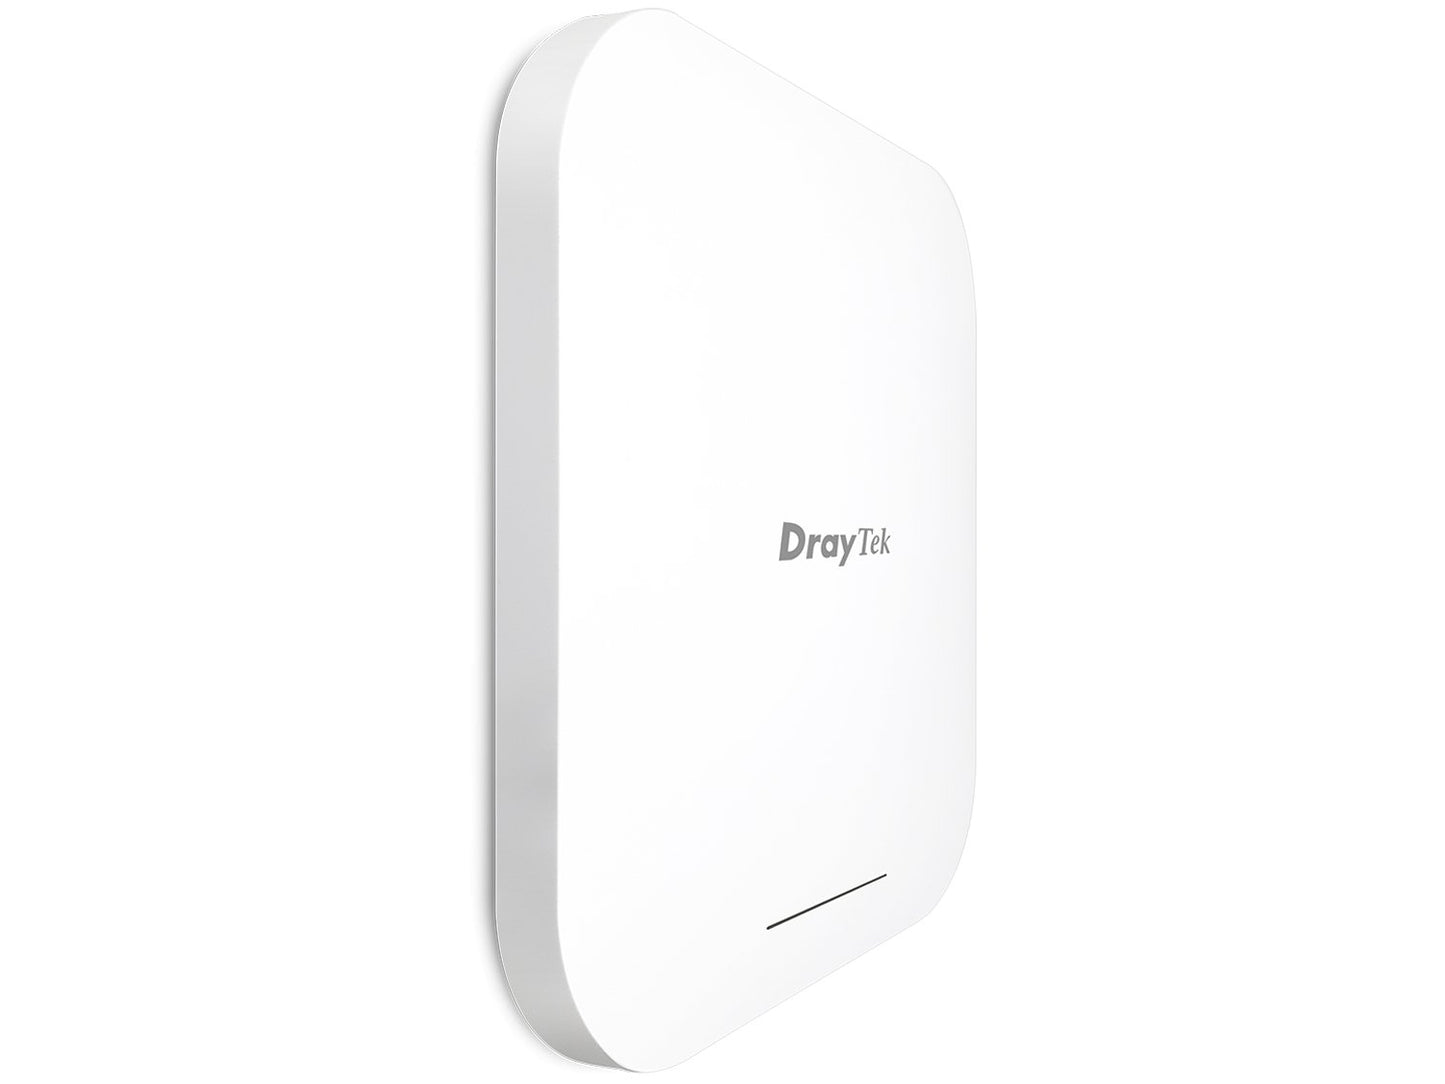 Draytek VigorAP 1060C Wi-Fi 6 Access Point AX3600 Left Side Profile View